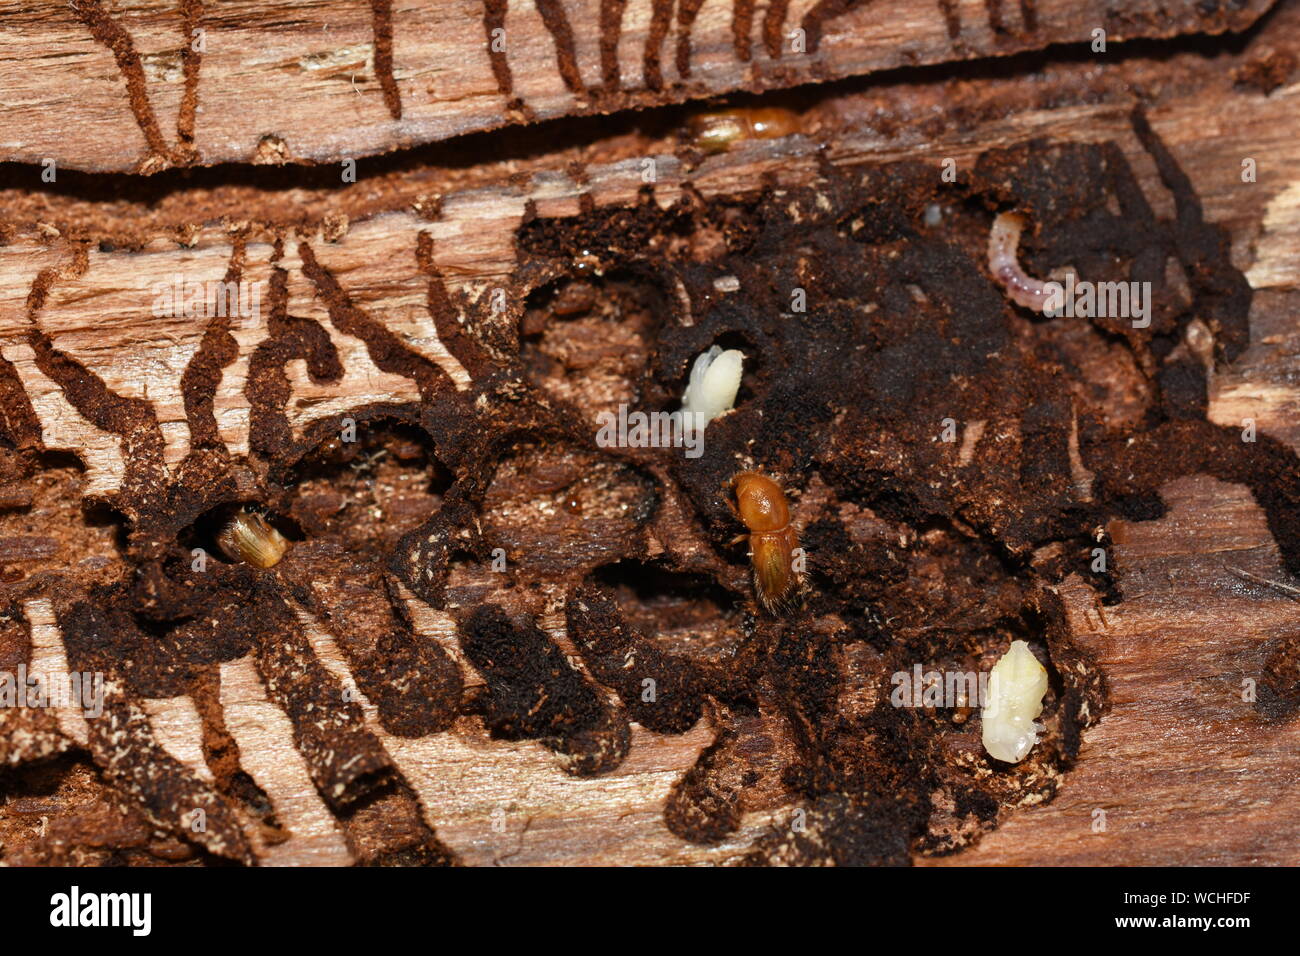 European spruce bark beetle Ips typographus infestion under the bark of a spruce tree Stock Photo